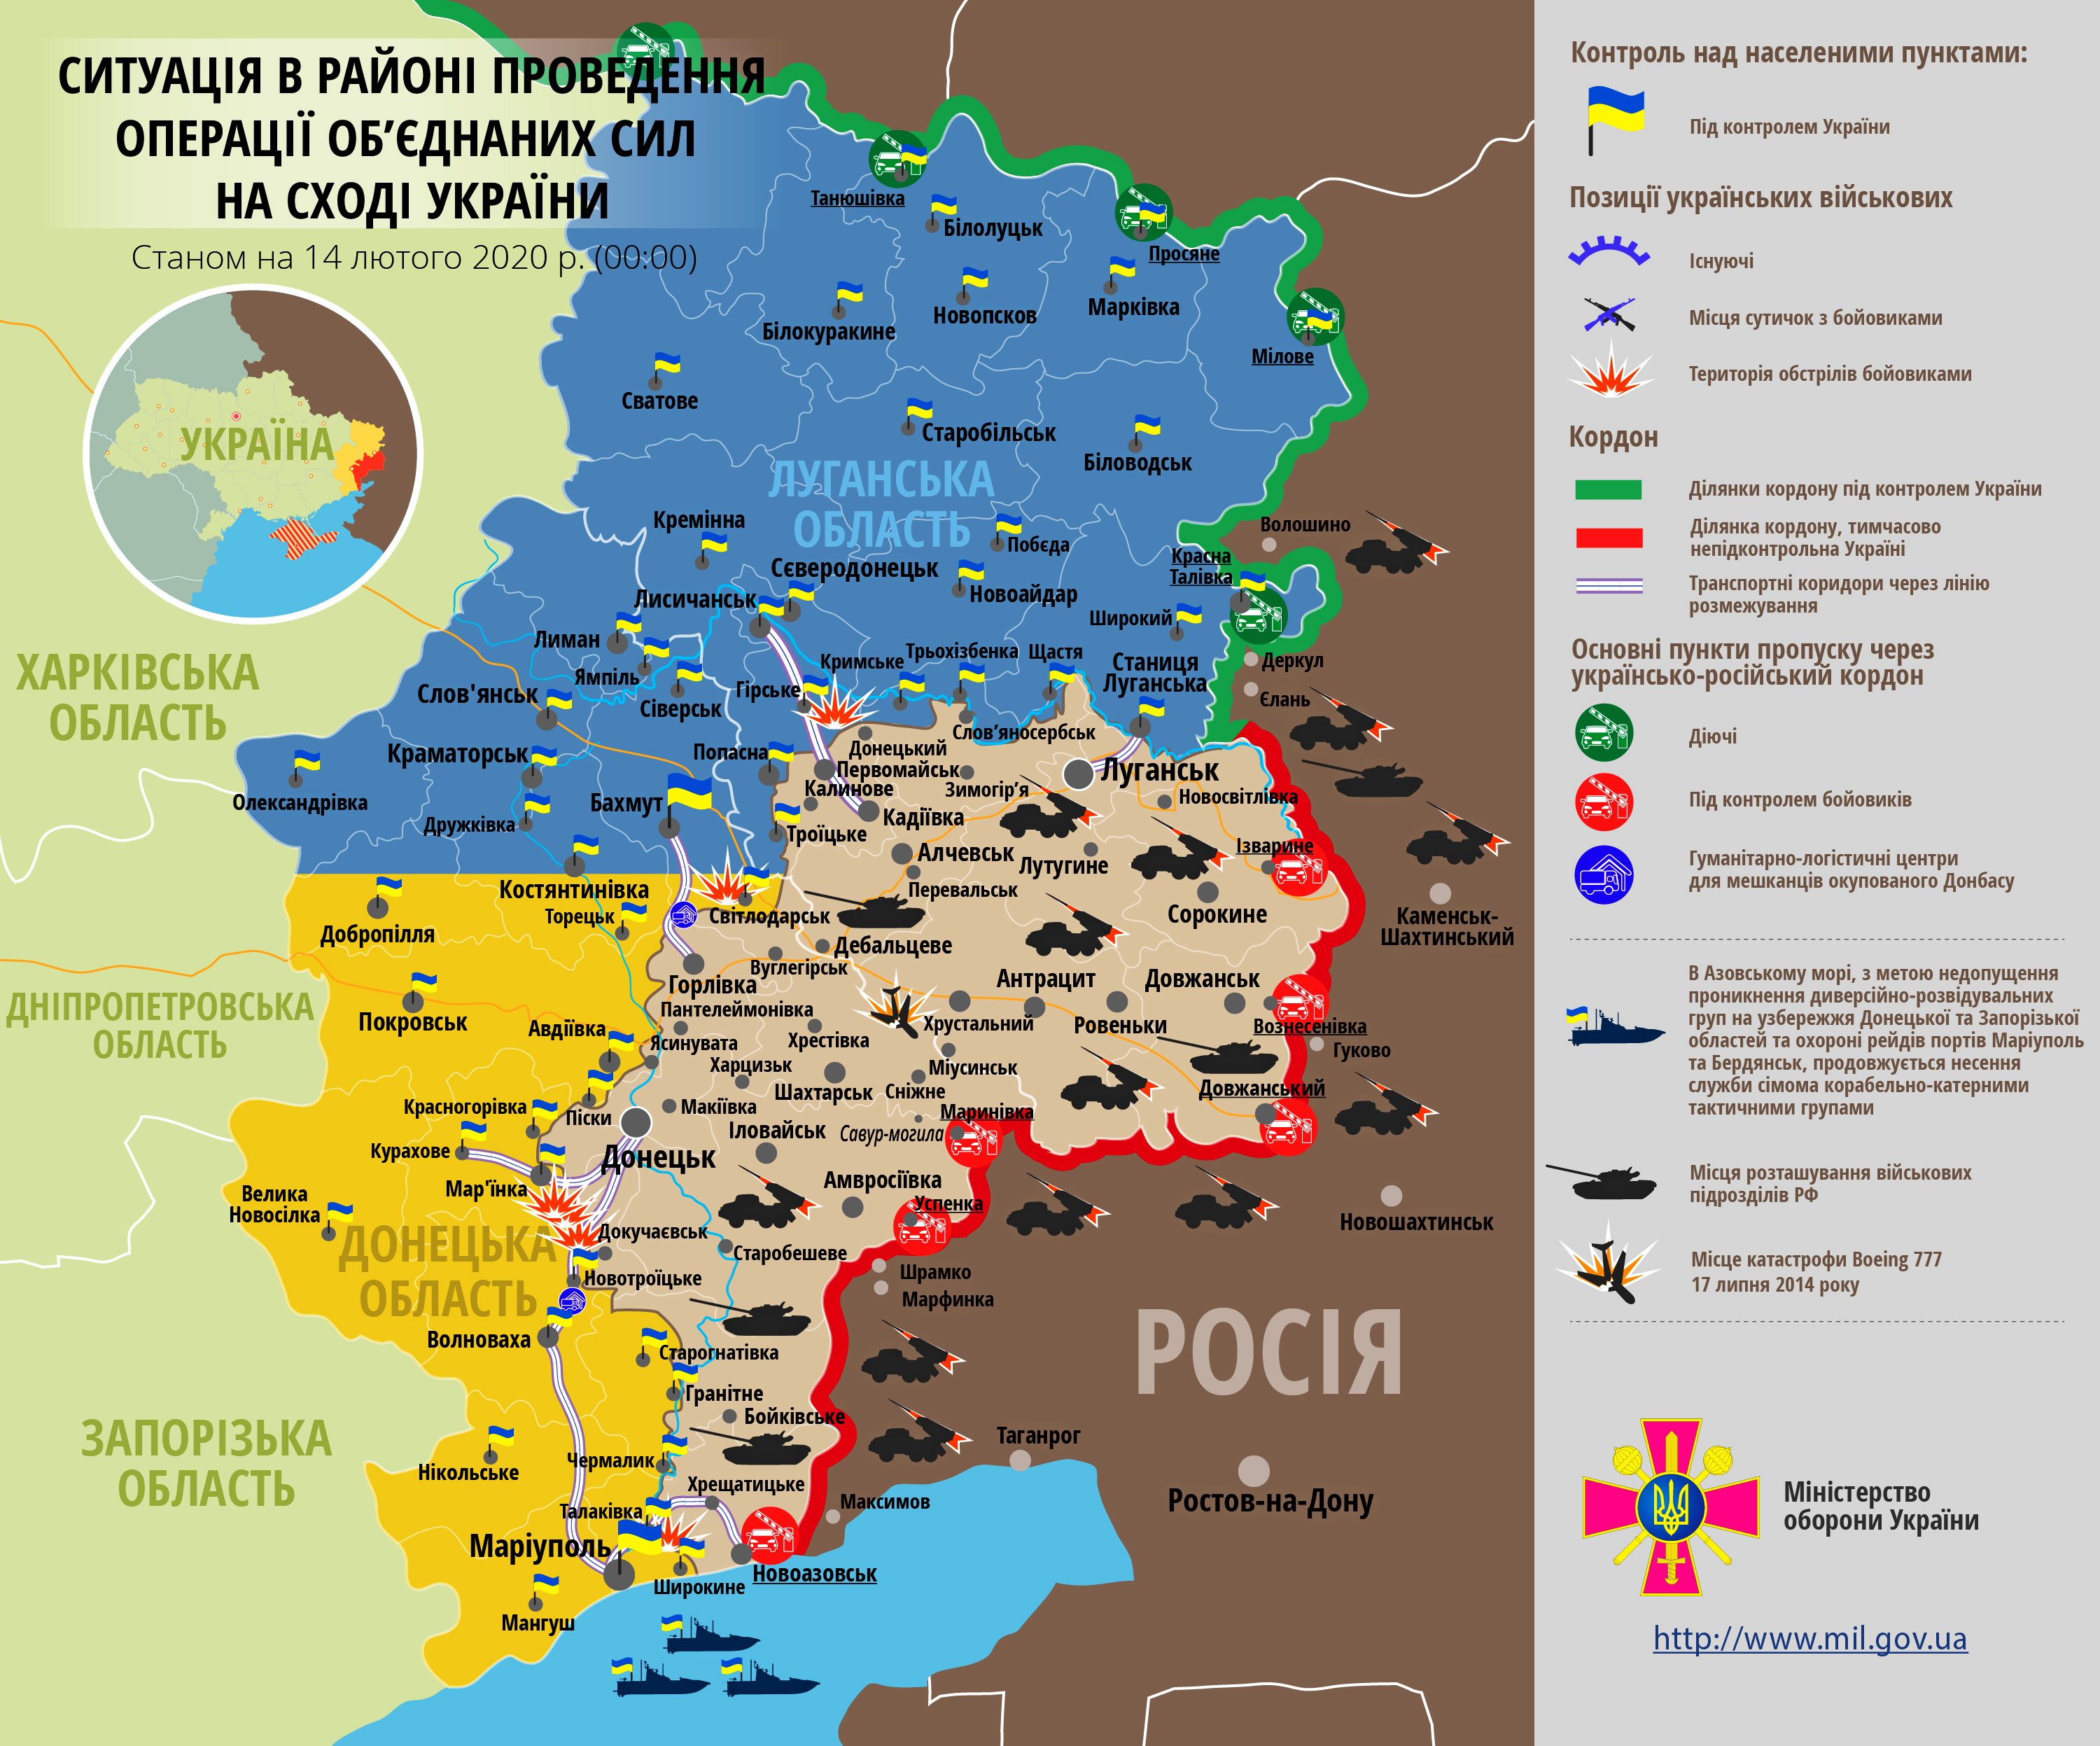 http://media.slovoidilo.ua/media/infographics/11/104508/karta-ato-rnbo-2020-02-14-uk_origin.jpg